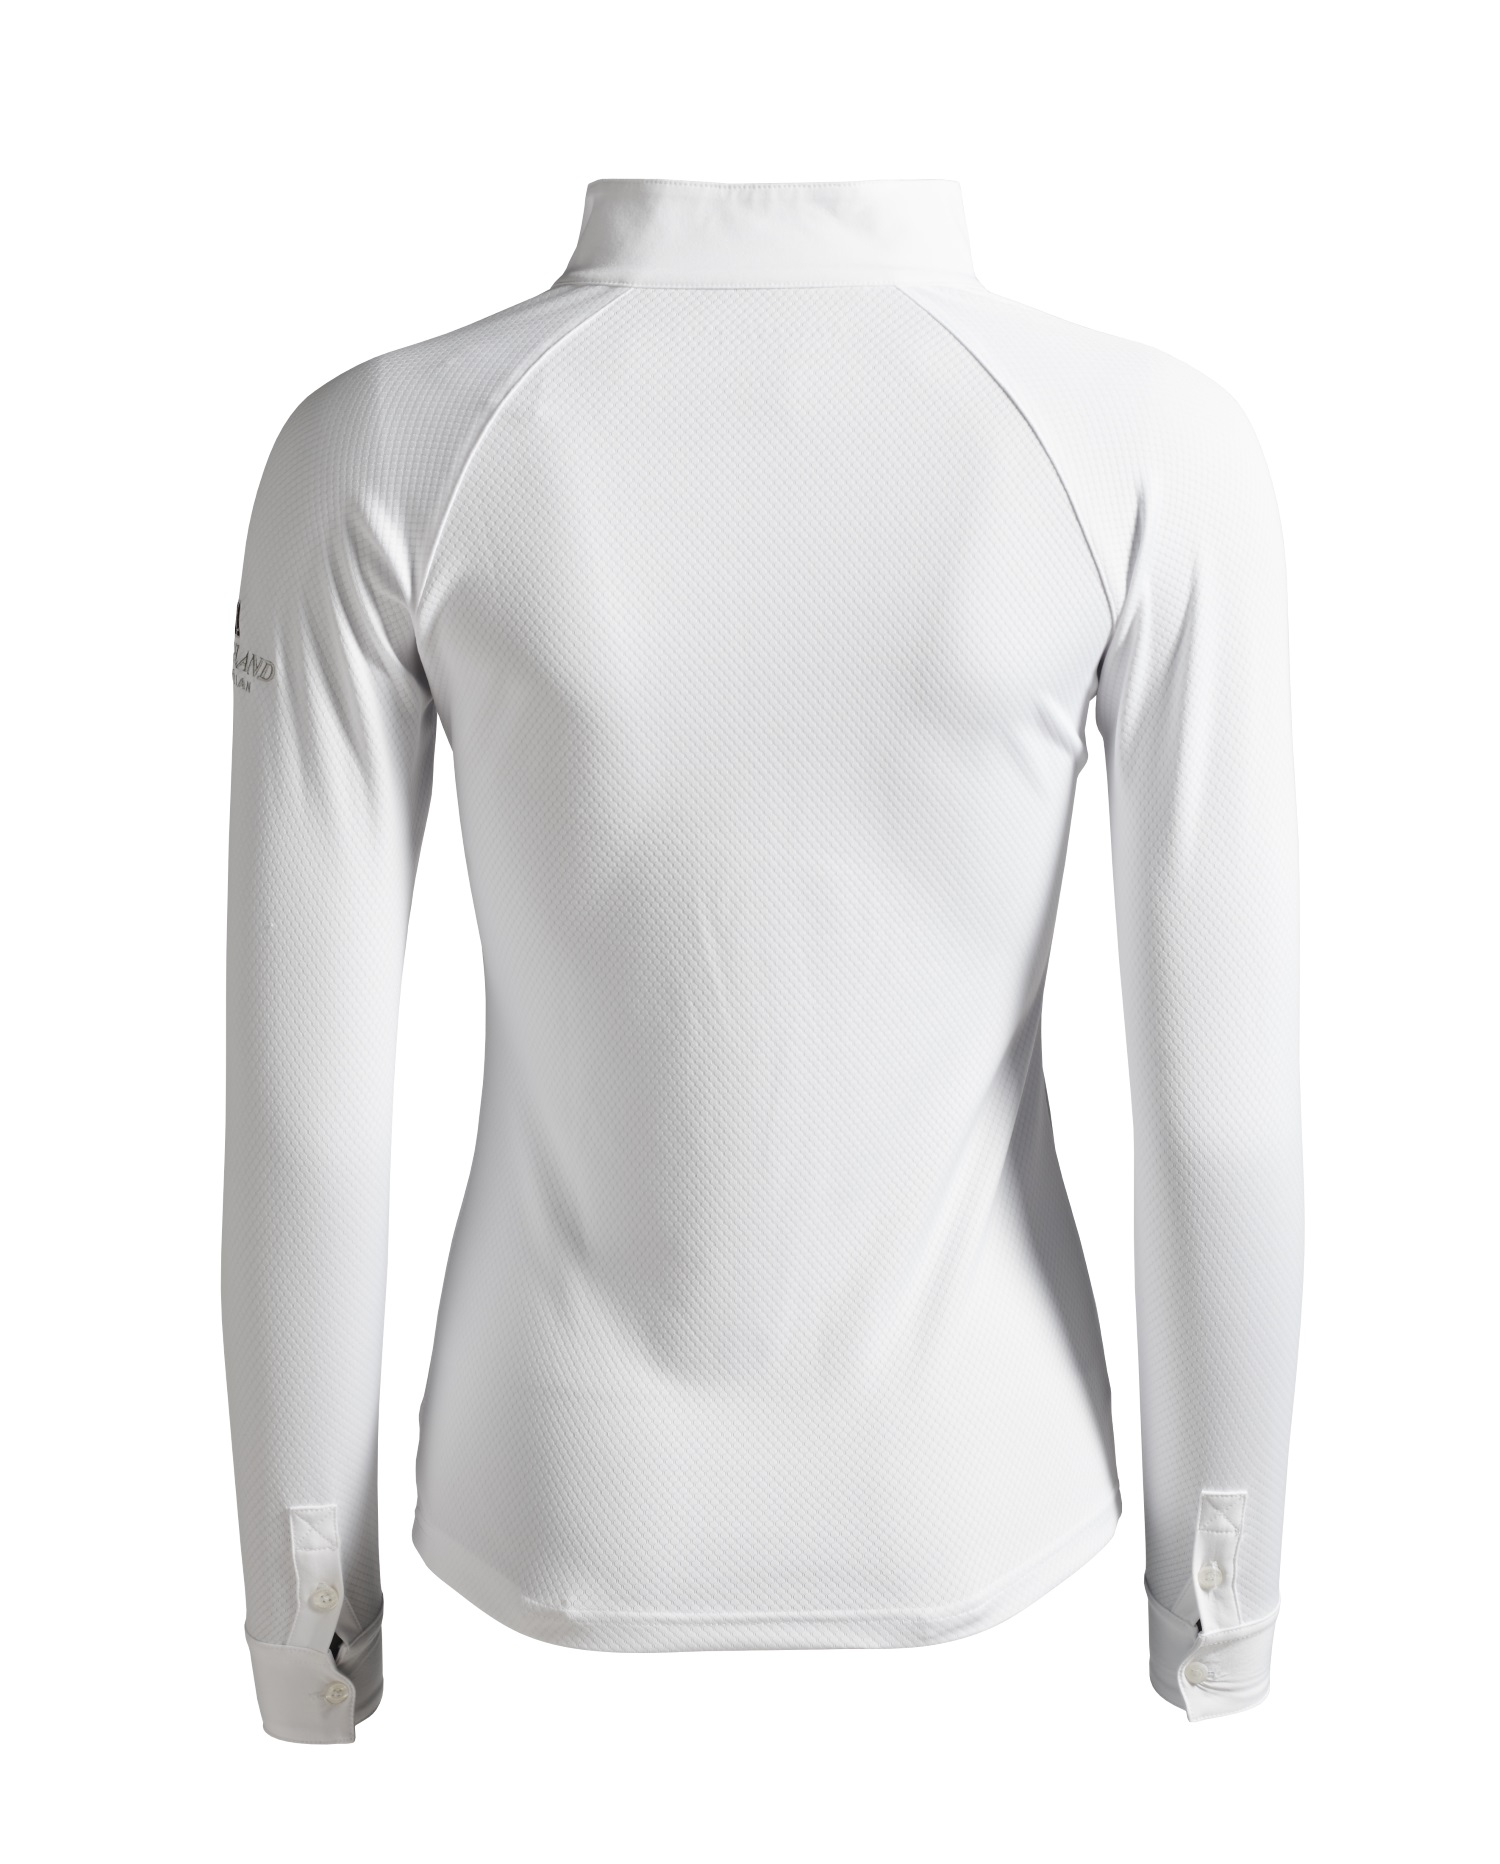 KINGSLAND Classic Damen Langarm Turniershirt - white - L - 2